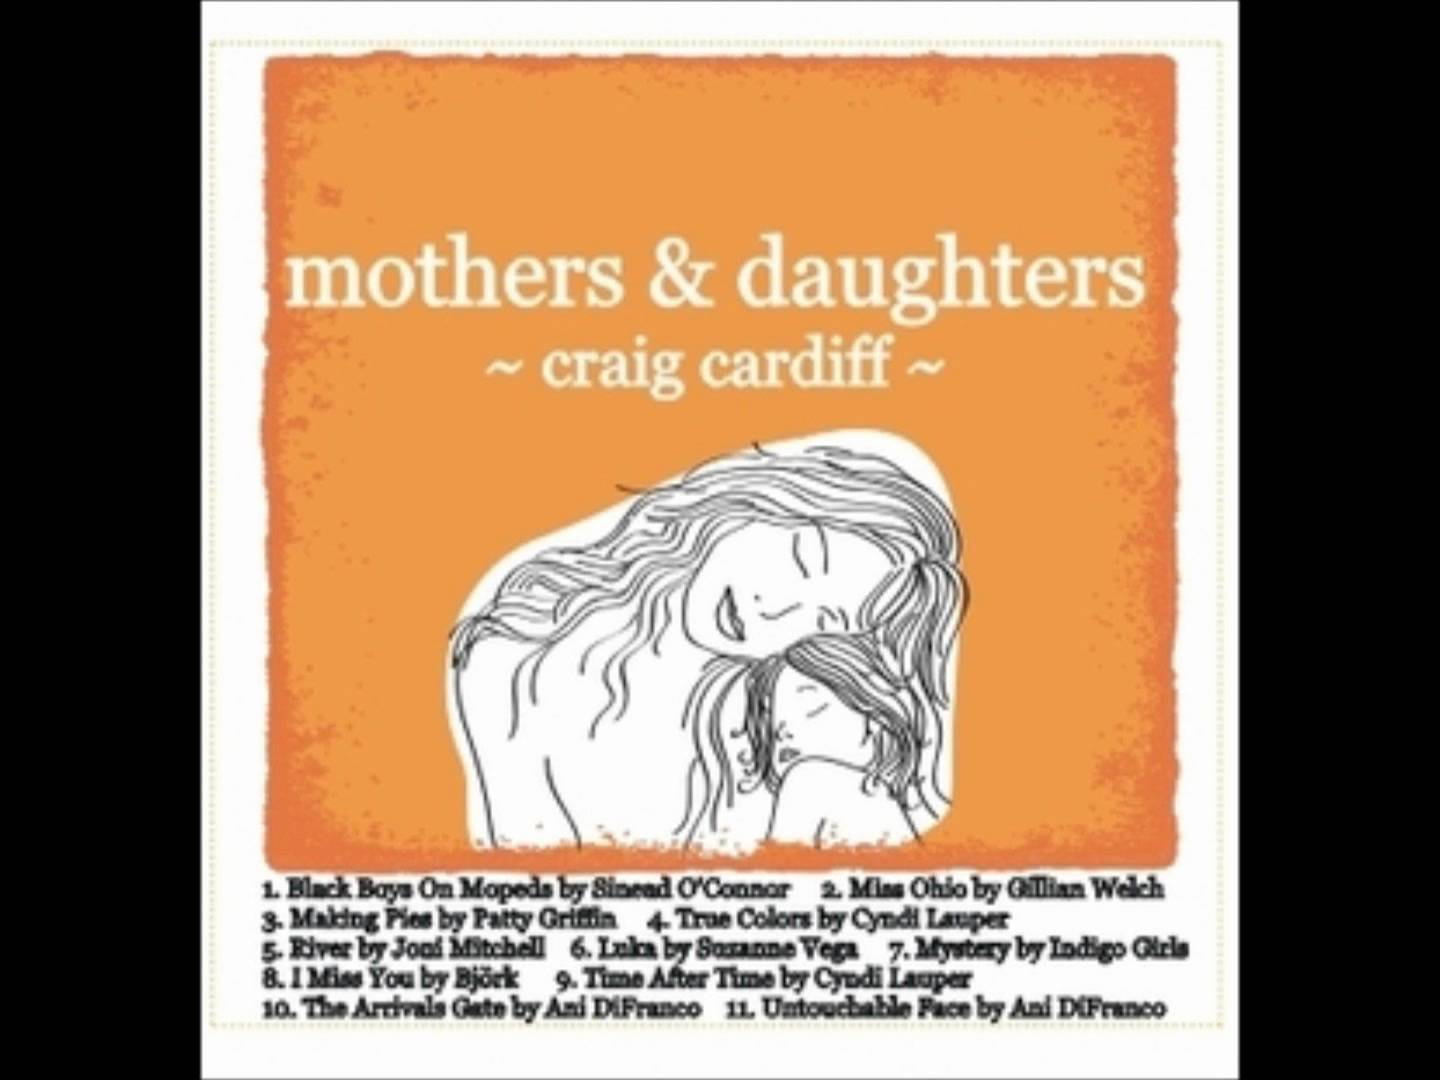 The Arrivals Gate – Craig Cardiff (Ani DiFranco)